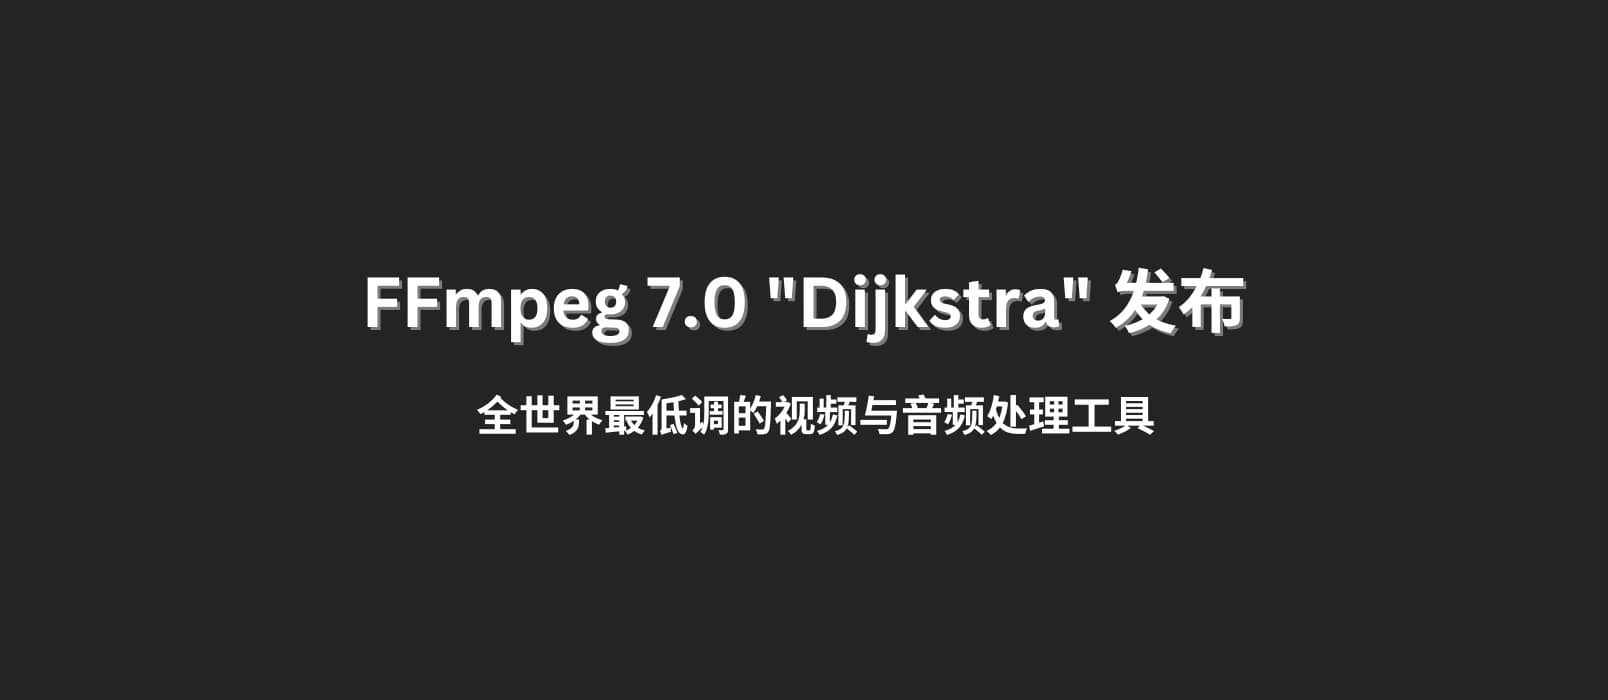 FFmpeg 7.0 “Dijkstra” 发布，全世界最低调的视频与音频处理工具